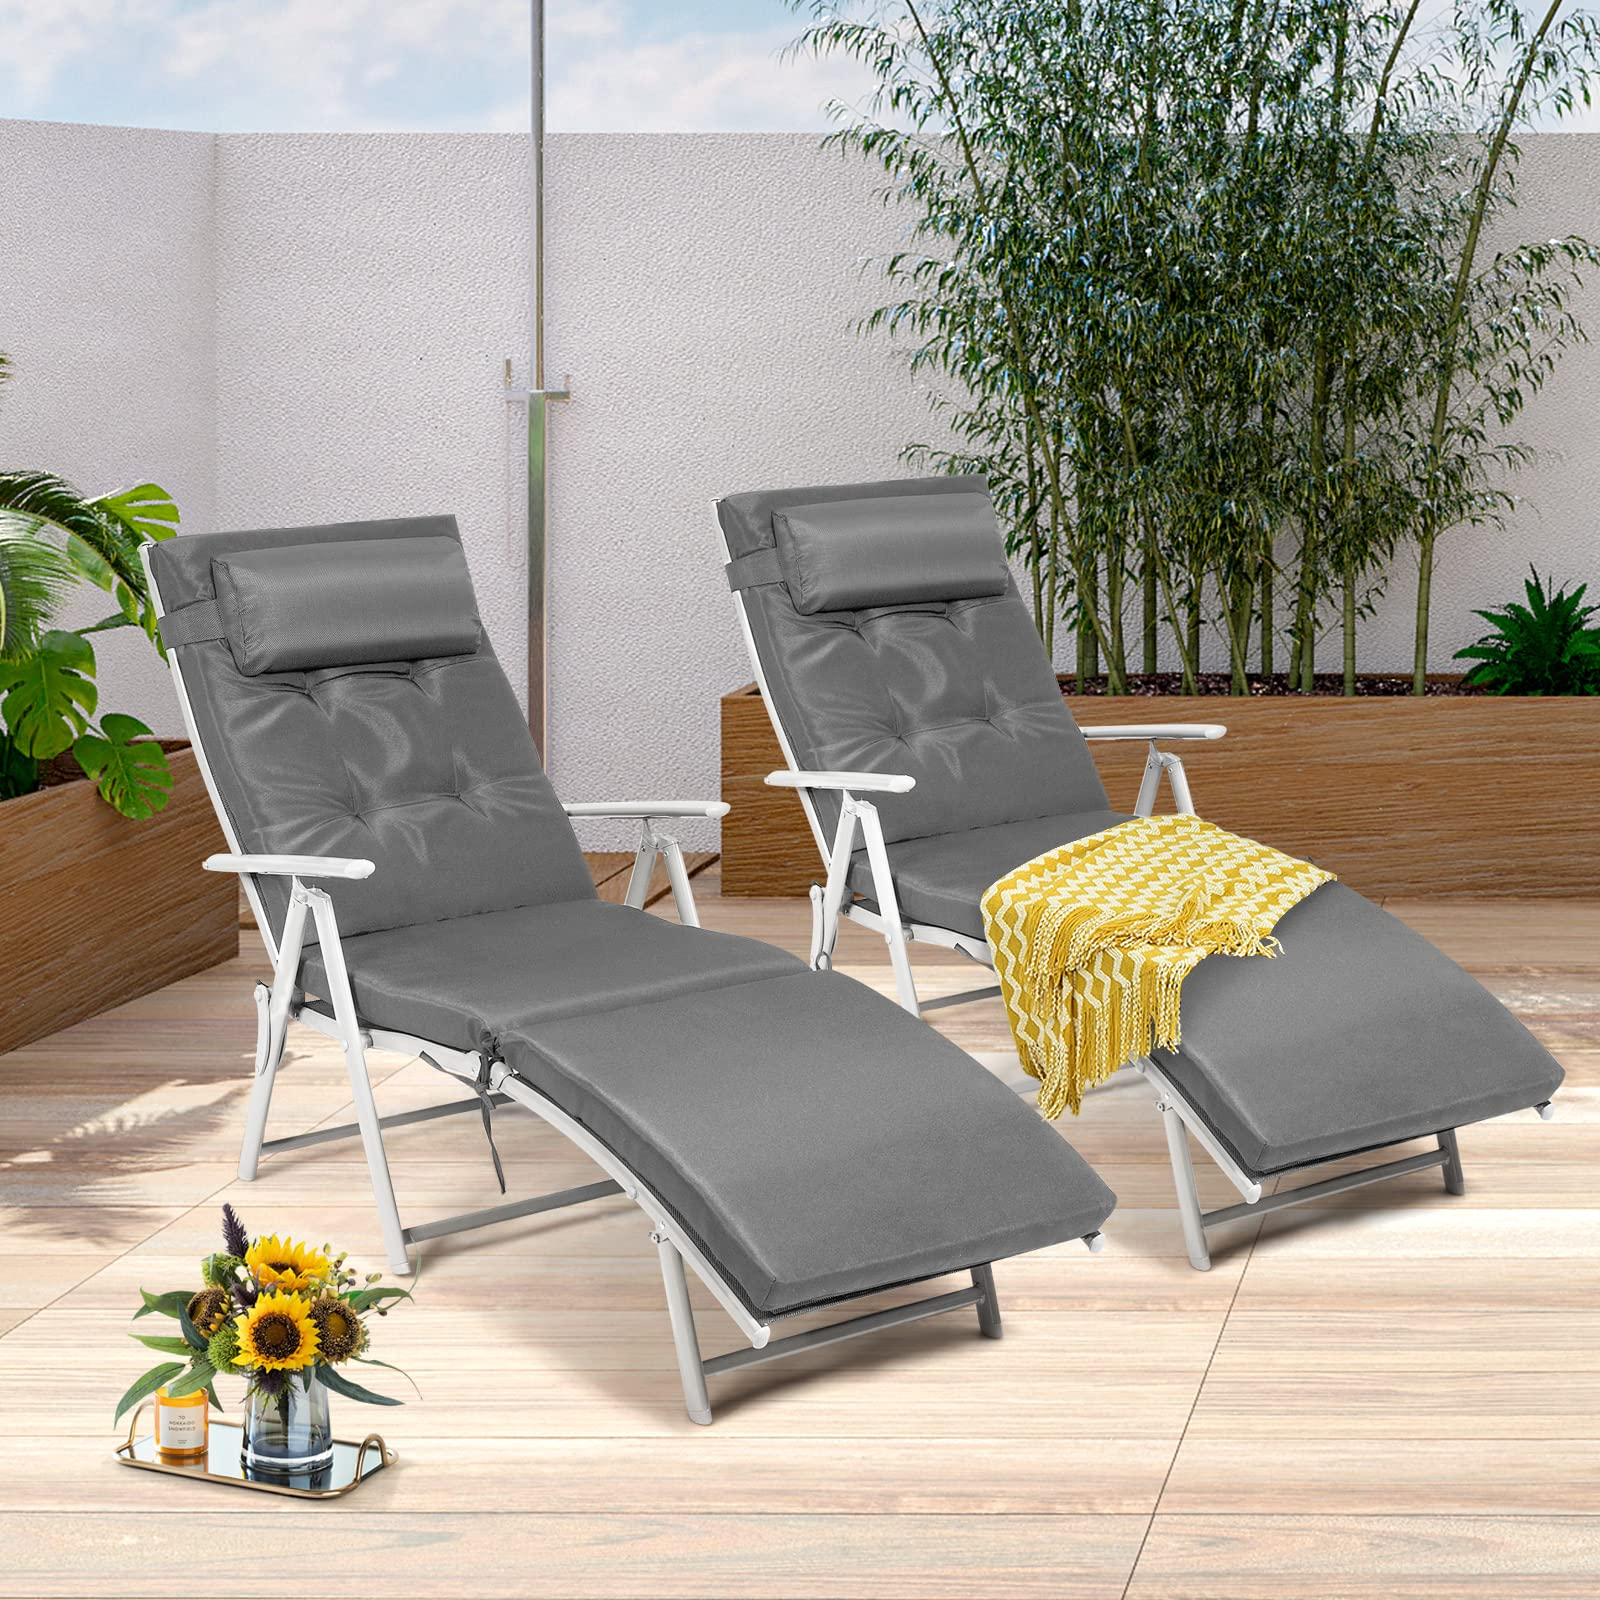 Pool Folding Reclining Beach Chair W/Removable Cushion&Headrest Pillow